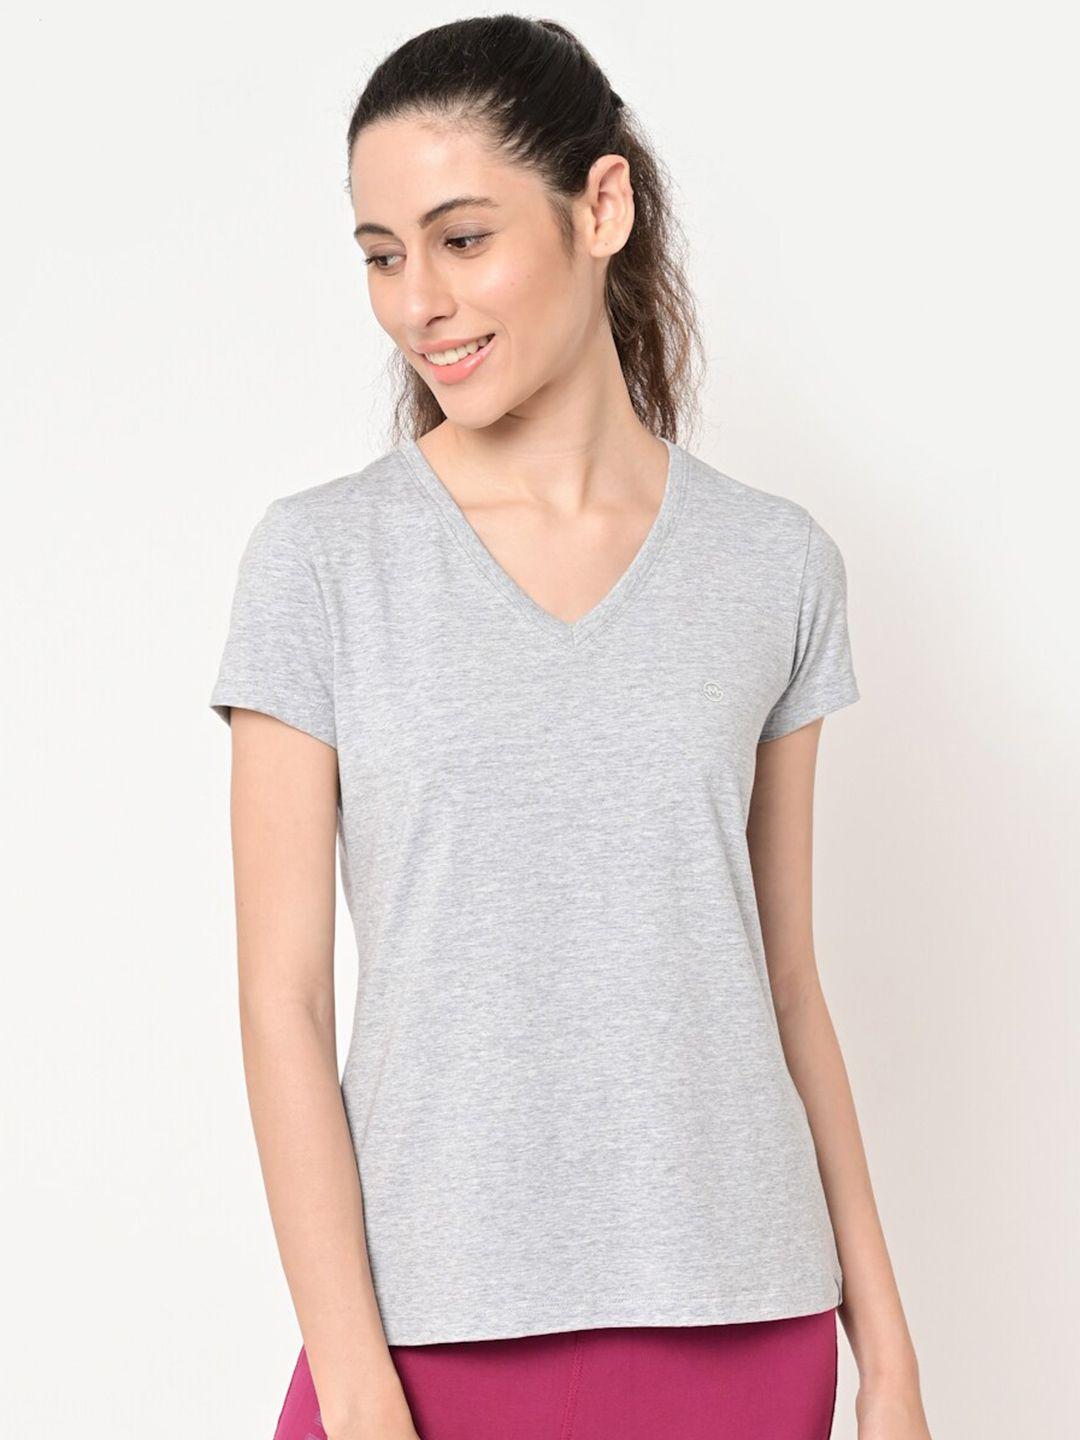 maysixty women grey solid v-neck t-shirt